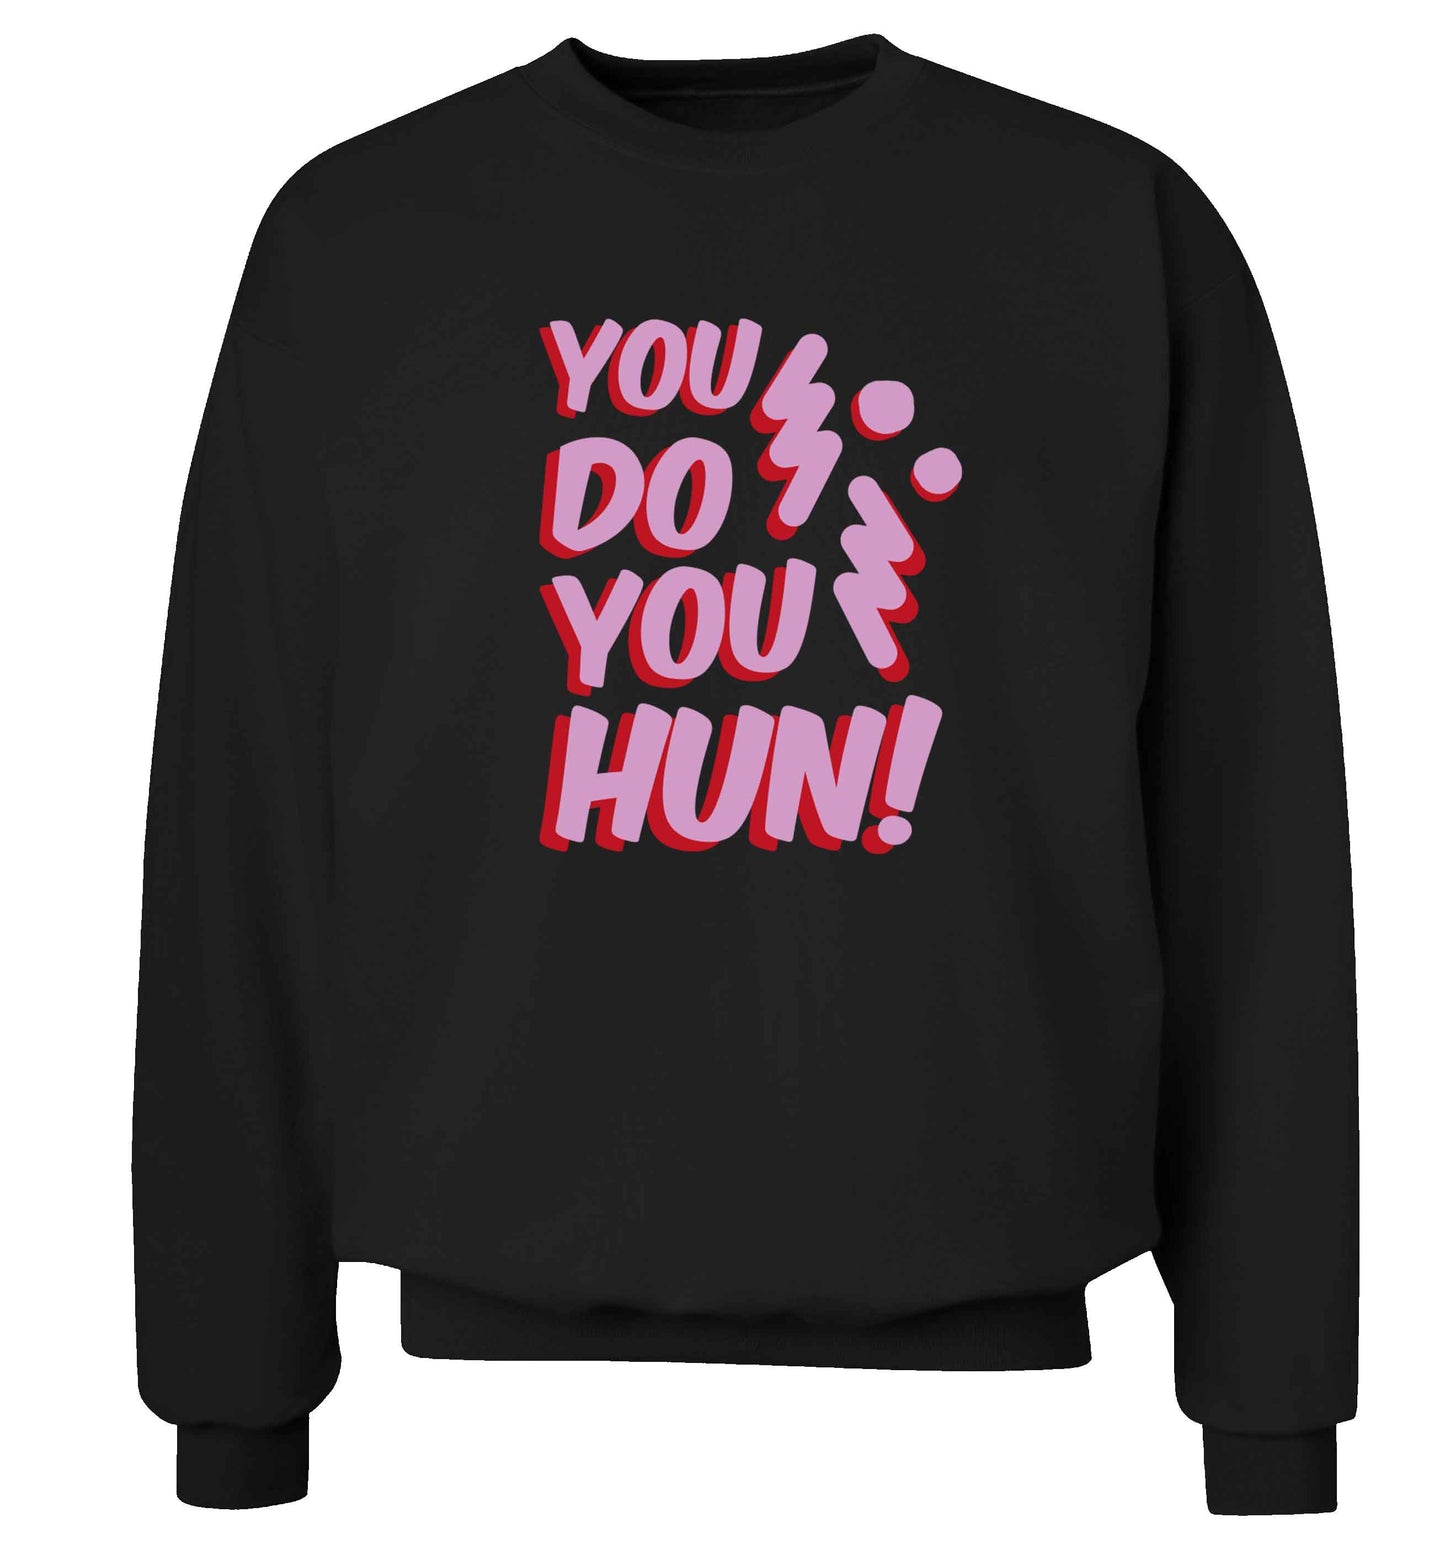 You do you hun adult's unisex black sweater 2XL